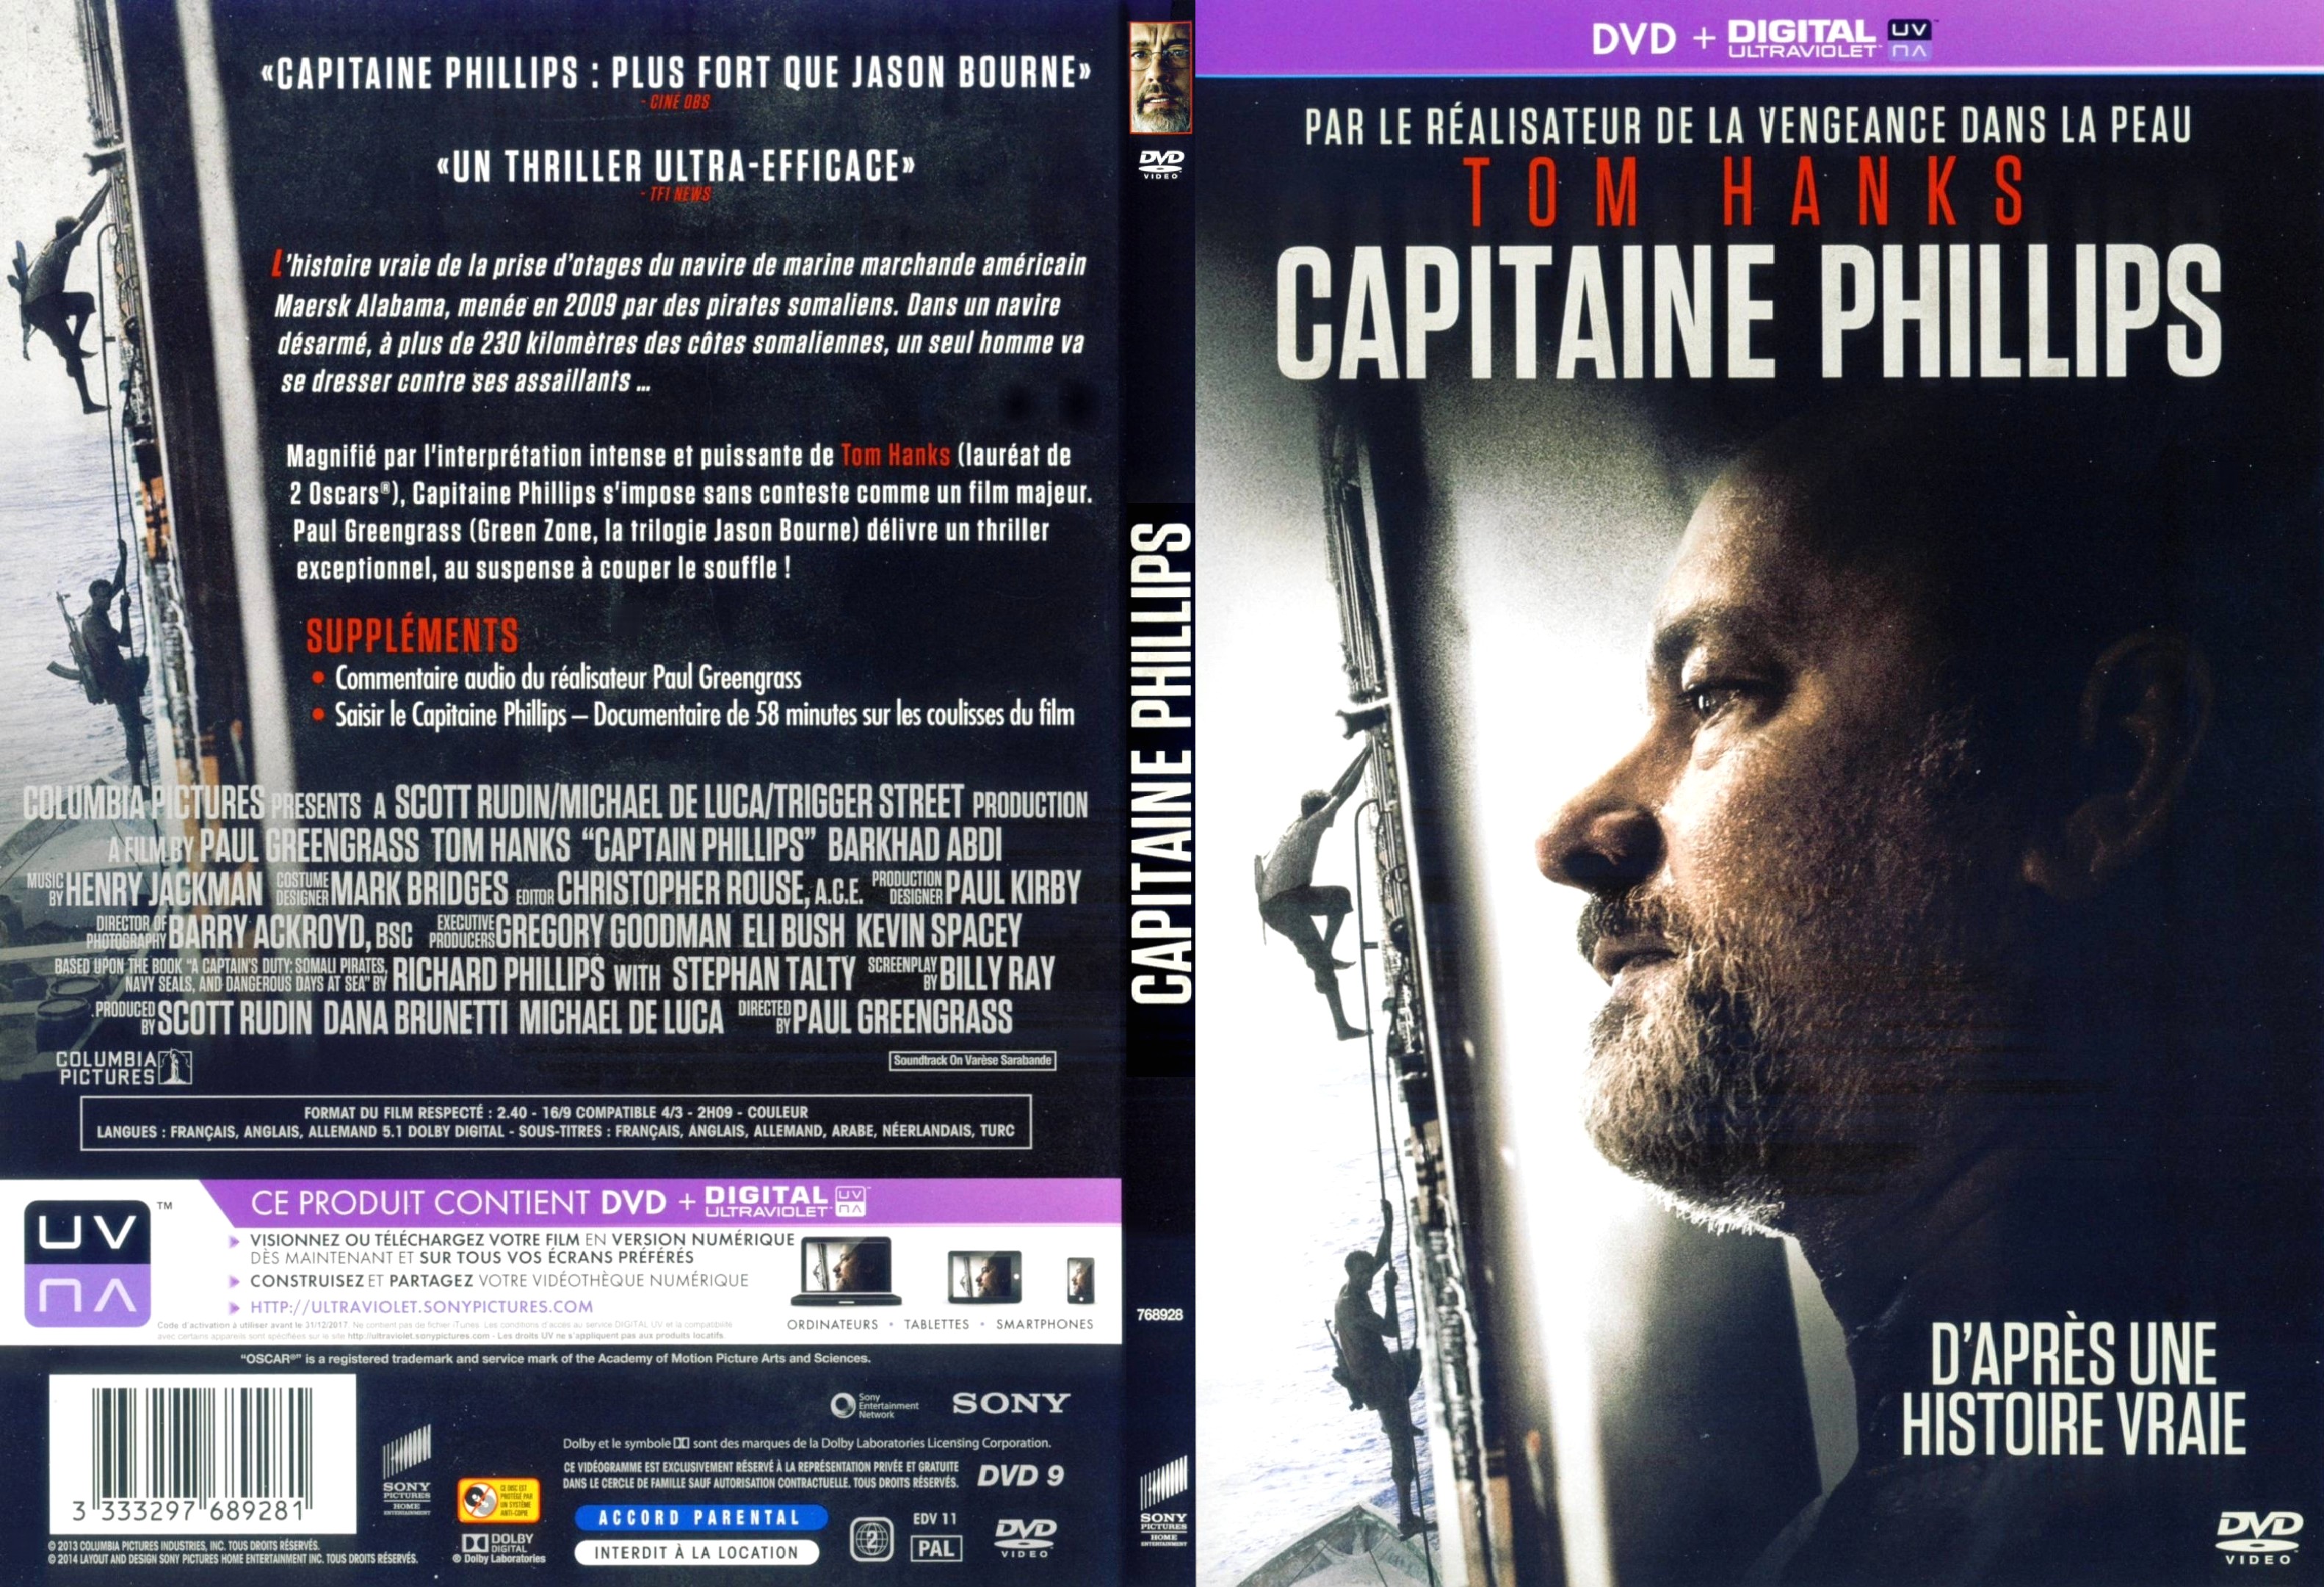 Jaquette DVD Capitaine Phillips - SLIM